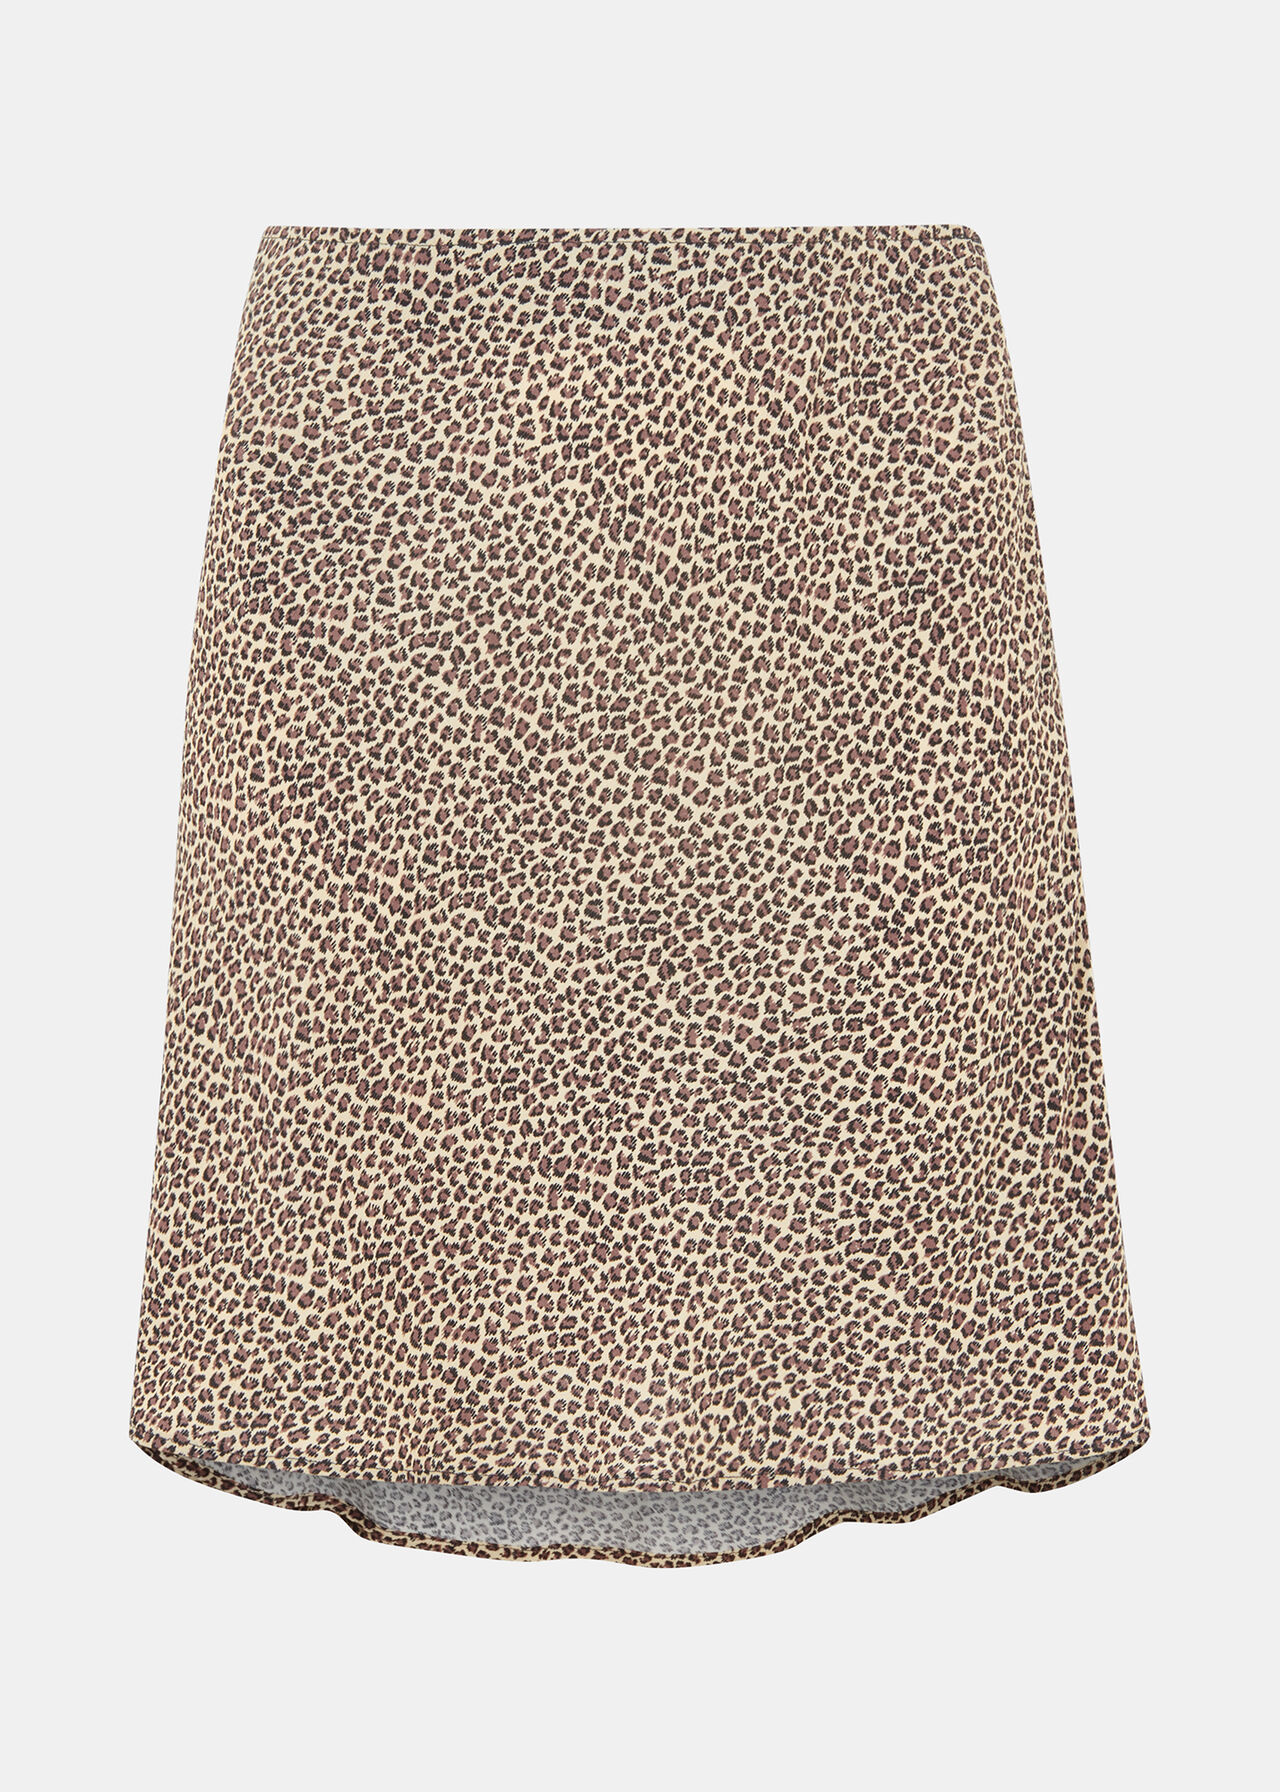 Dashed Leopard Mini Bias Skirt